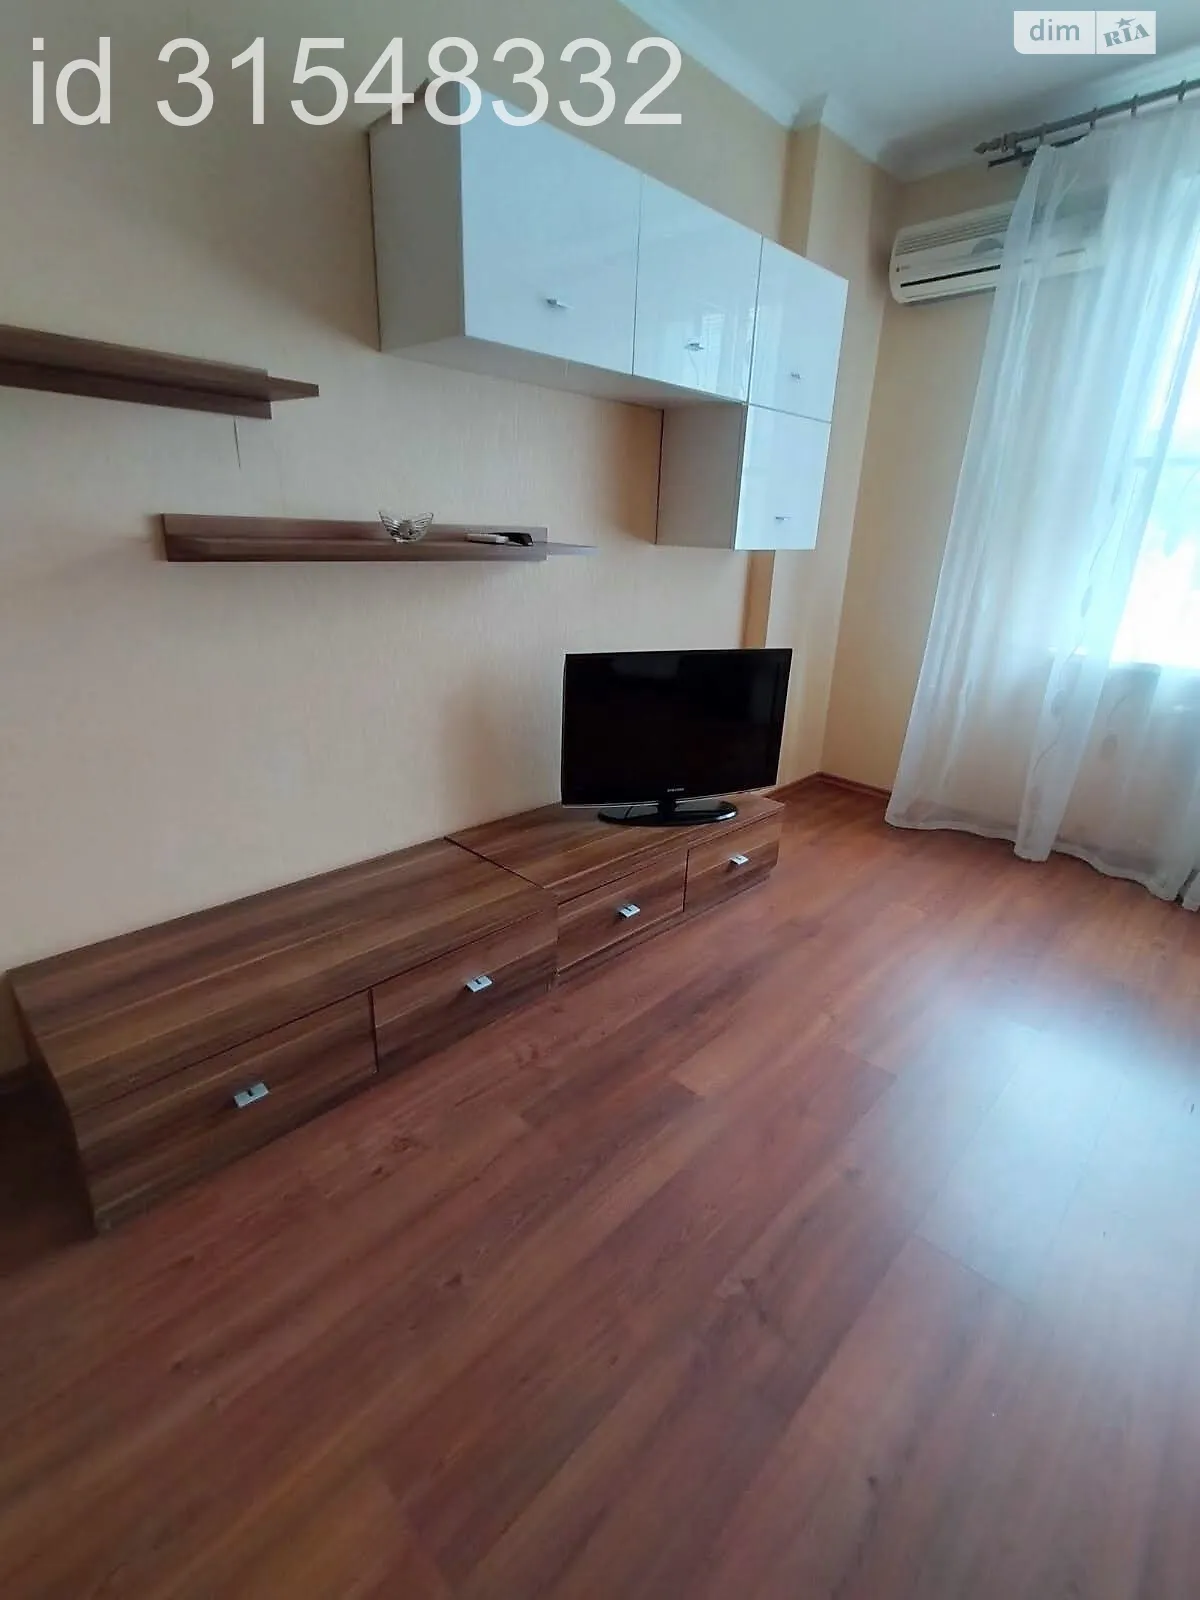 Сдается в аренду 1-комнатная квартира 50 кв. м в Одессе, ул. Академика Сахарова, 36